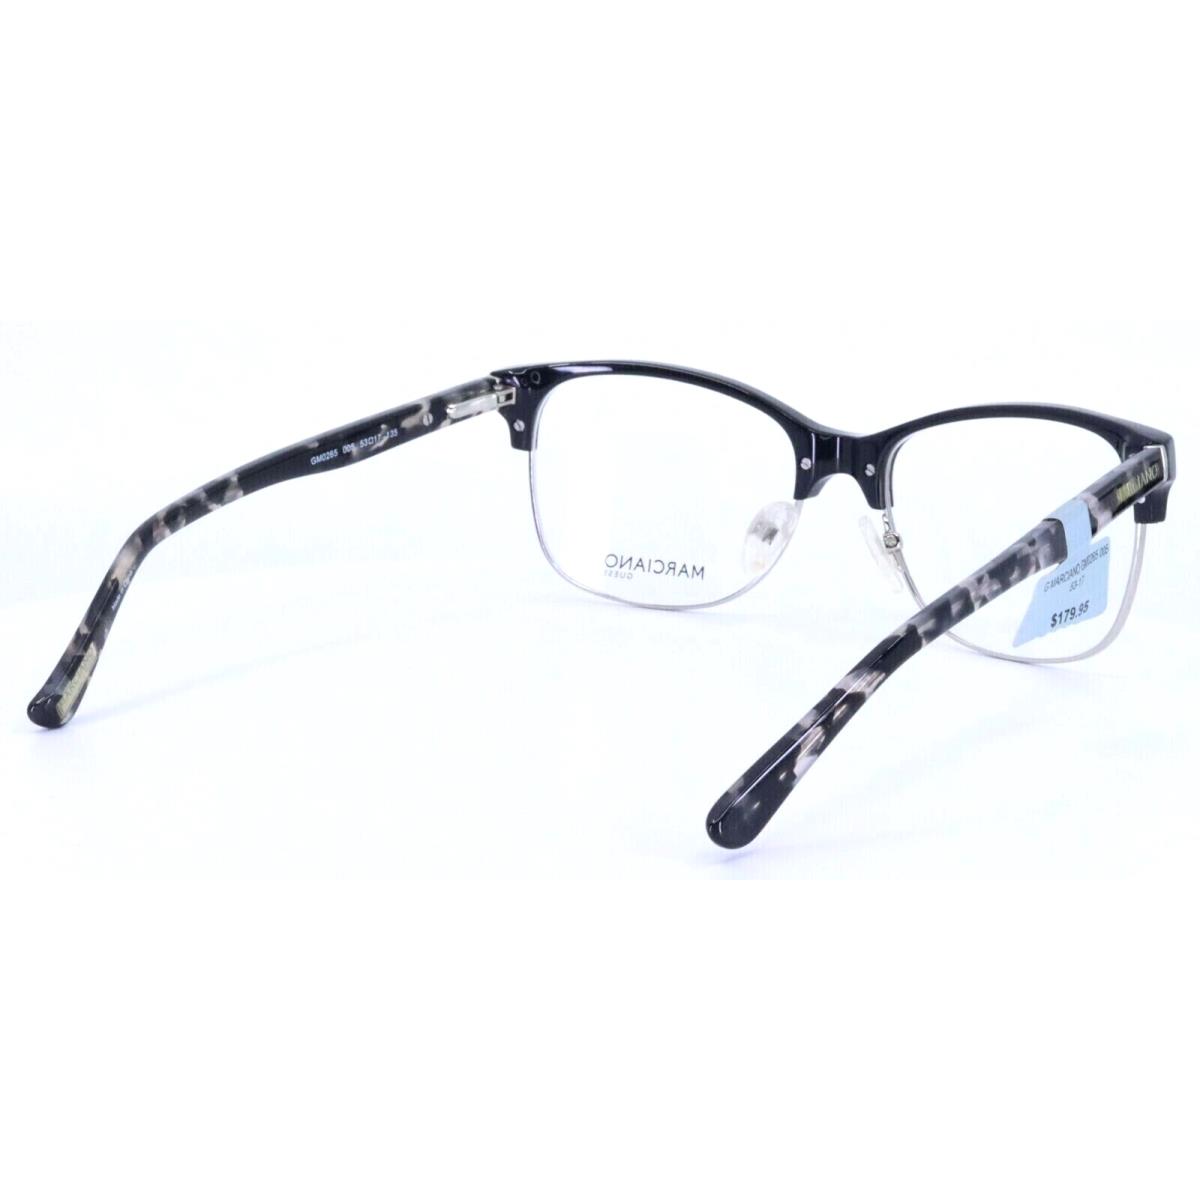 Guess eyeglasses  - Frame: Black 4